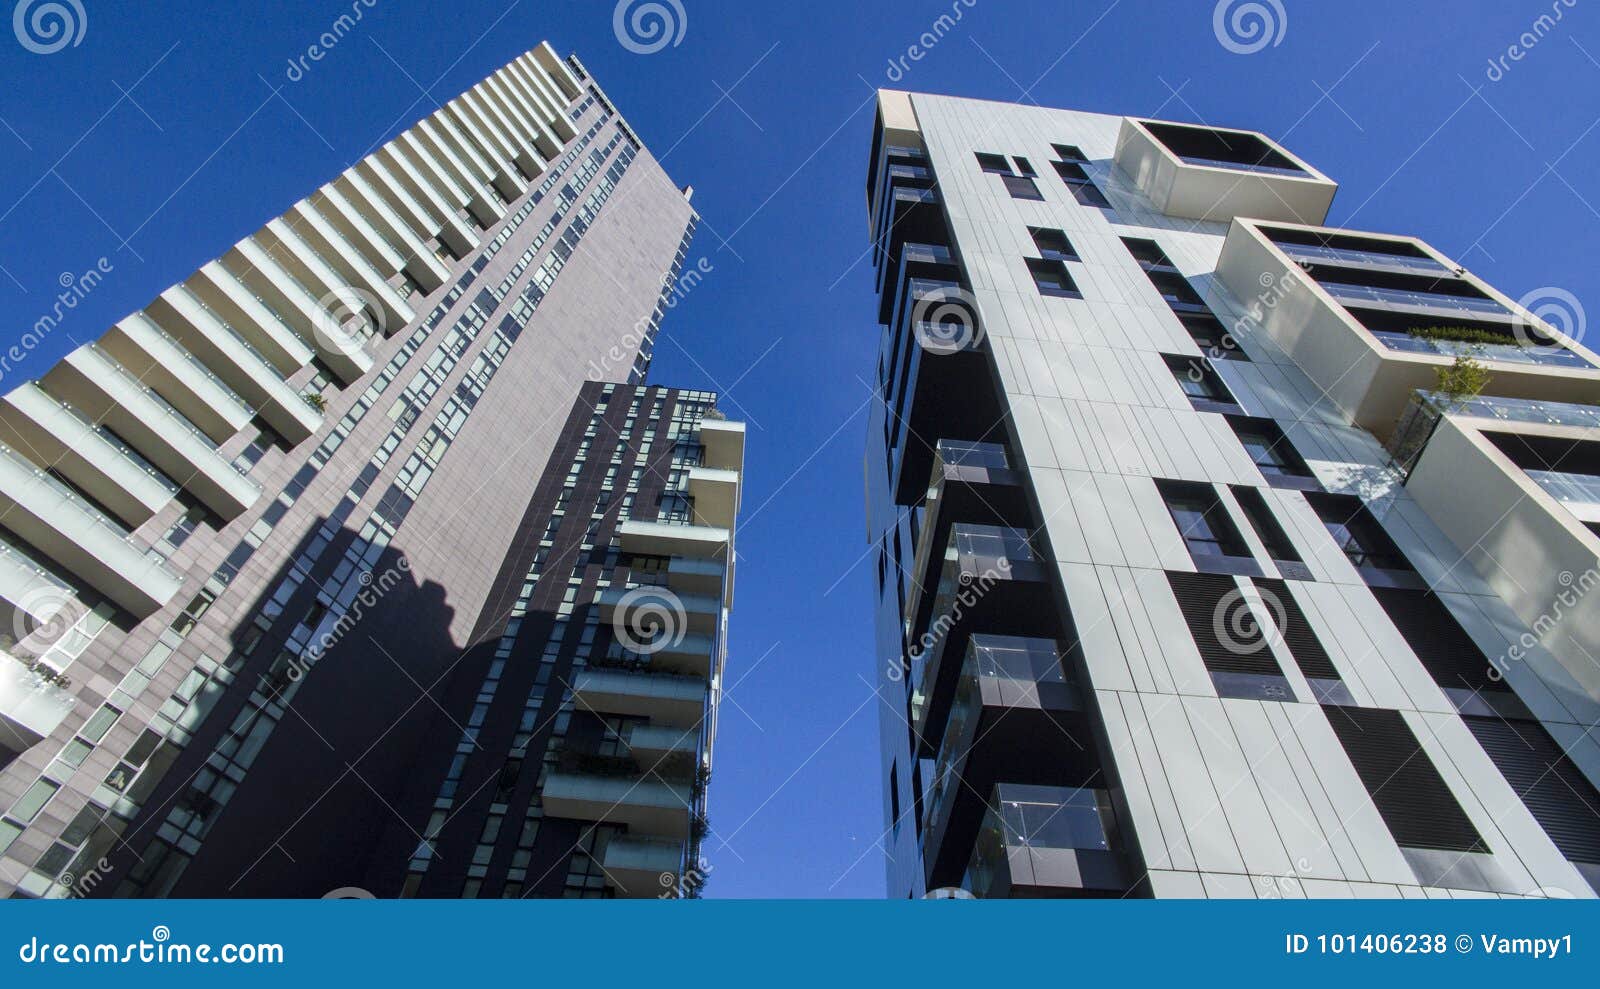 solaria tower, milan, porta nuova skyscraper residences, italy